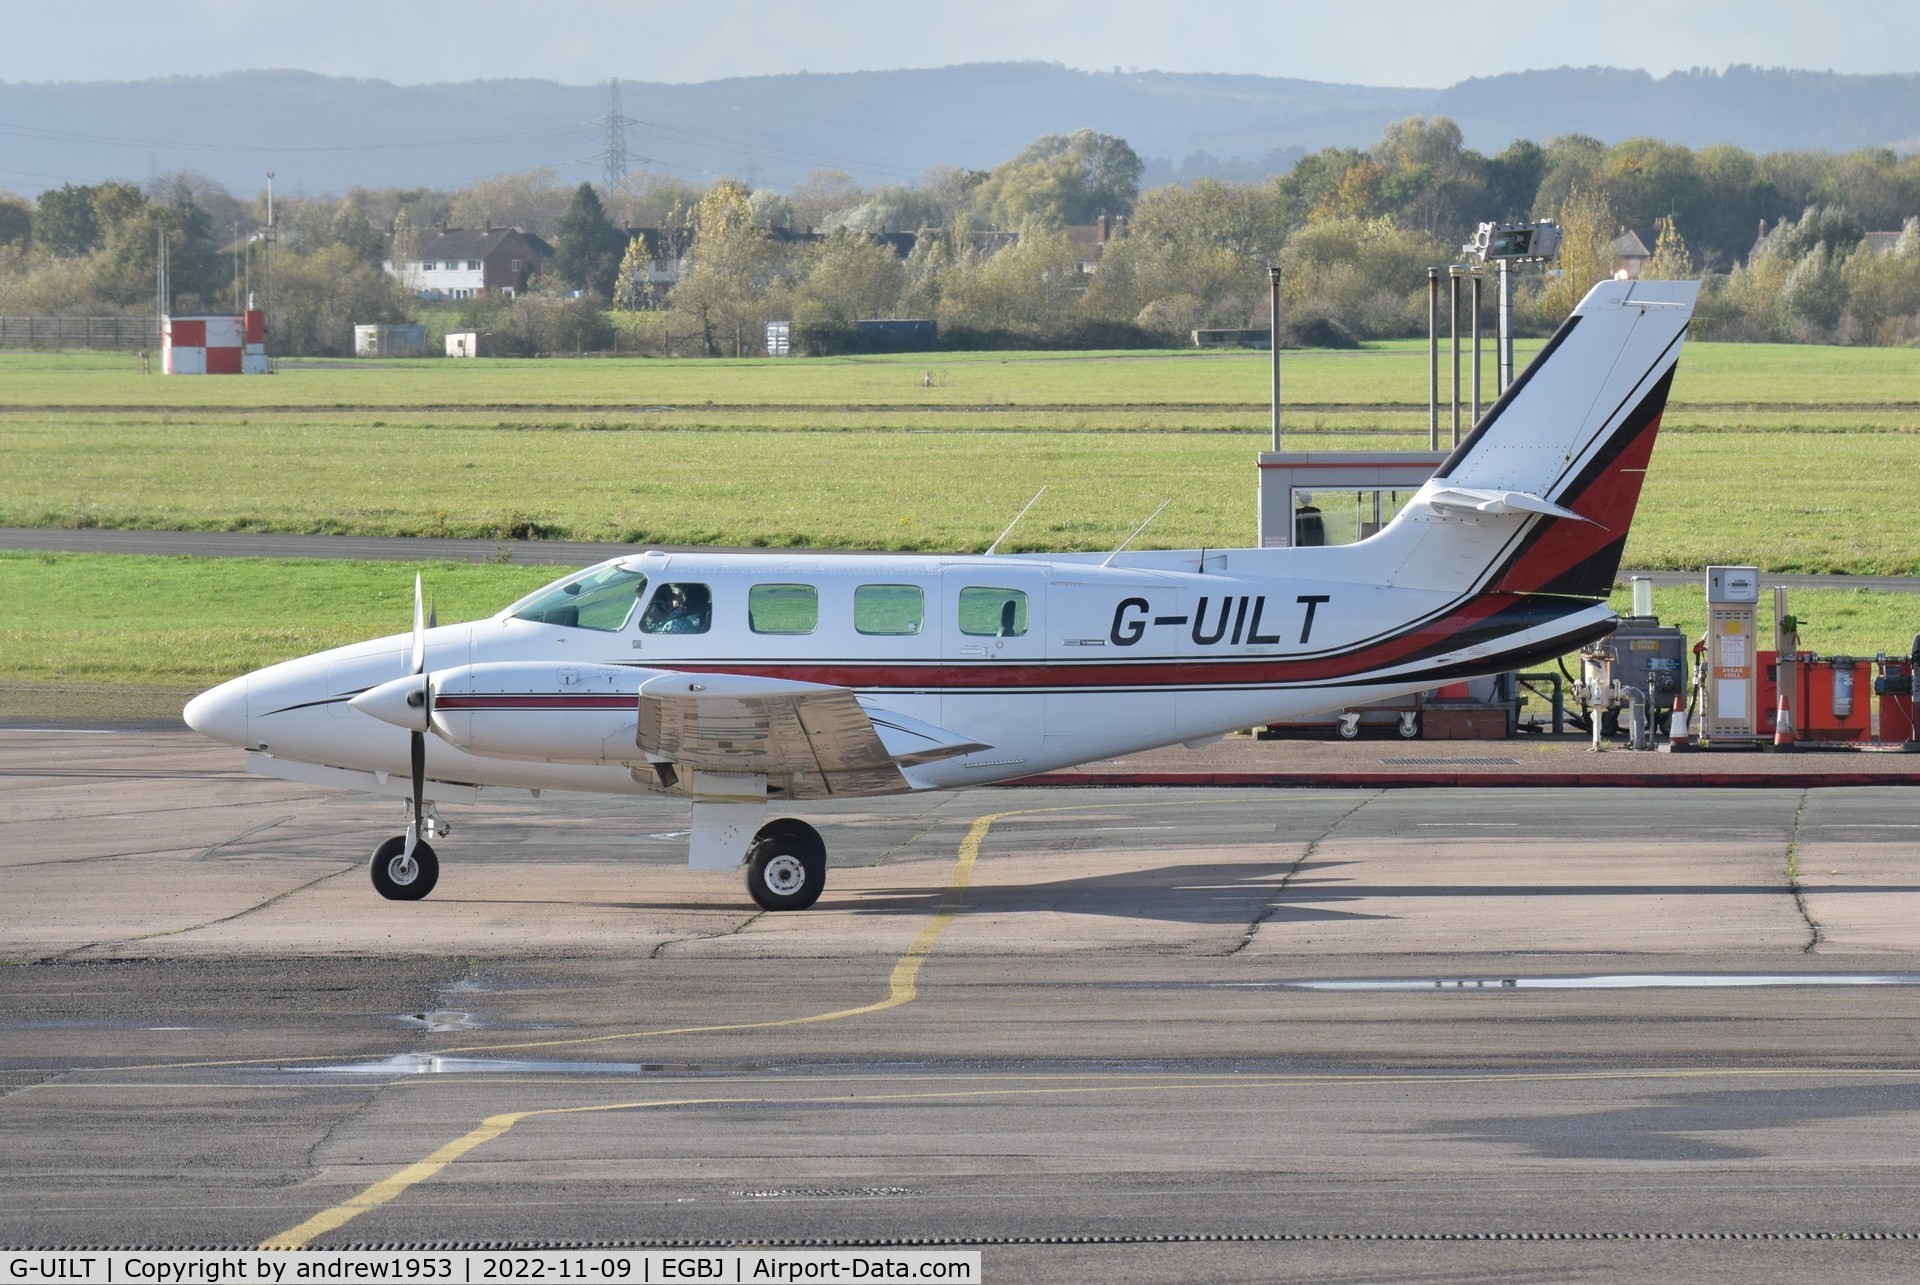 G-UILT, 1984 Cessna T303 Crusader C/N T303-00280, G-UILT at Gloucestershire Airport.